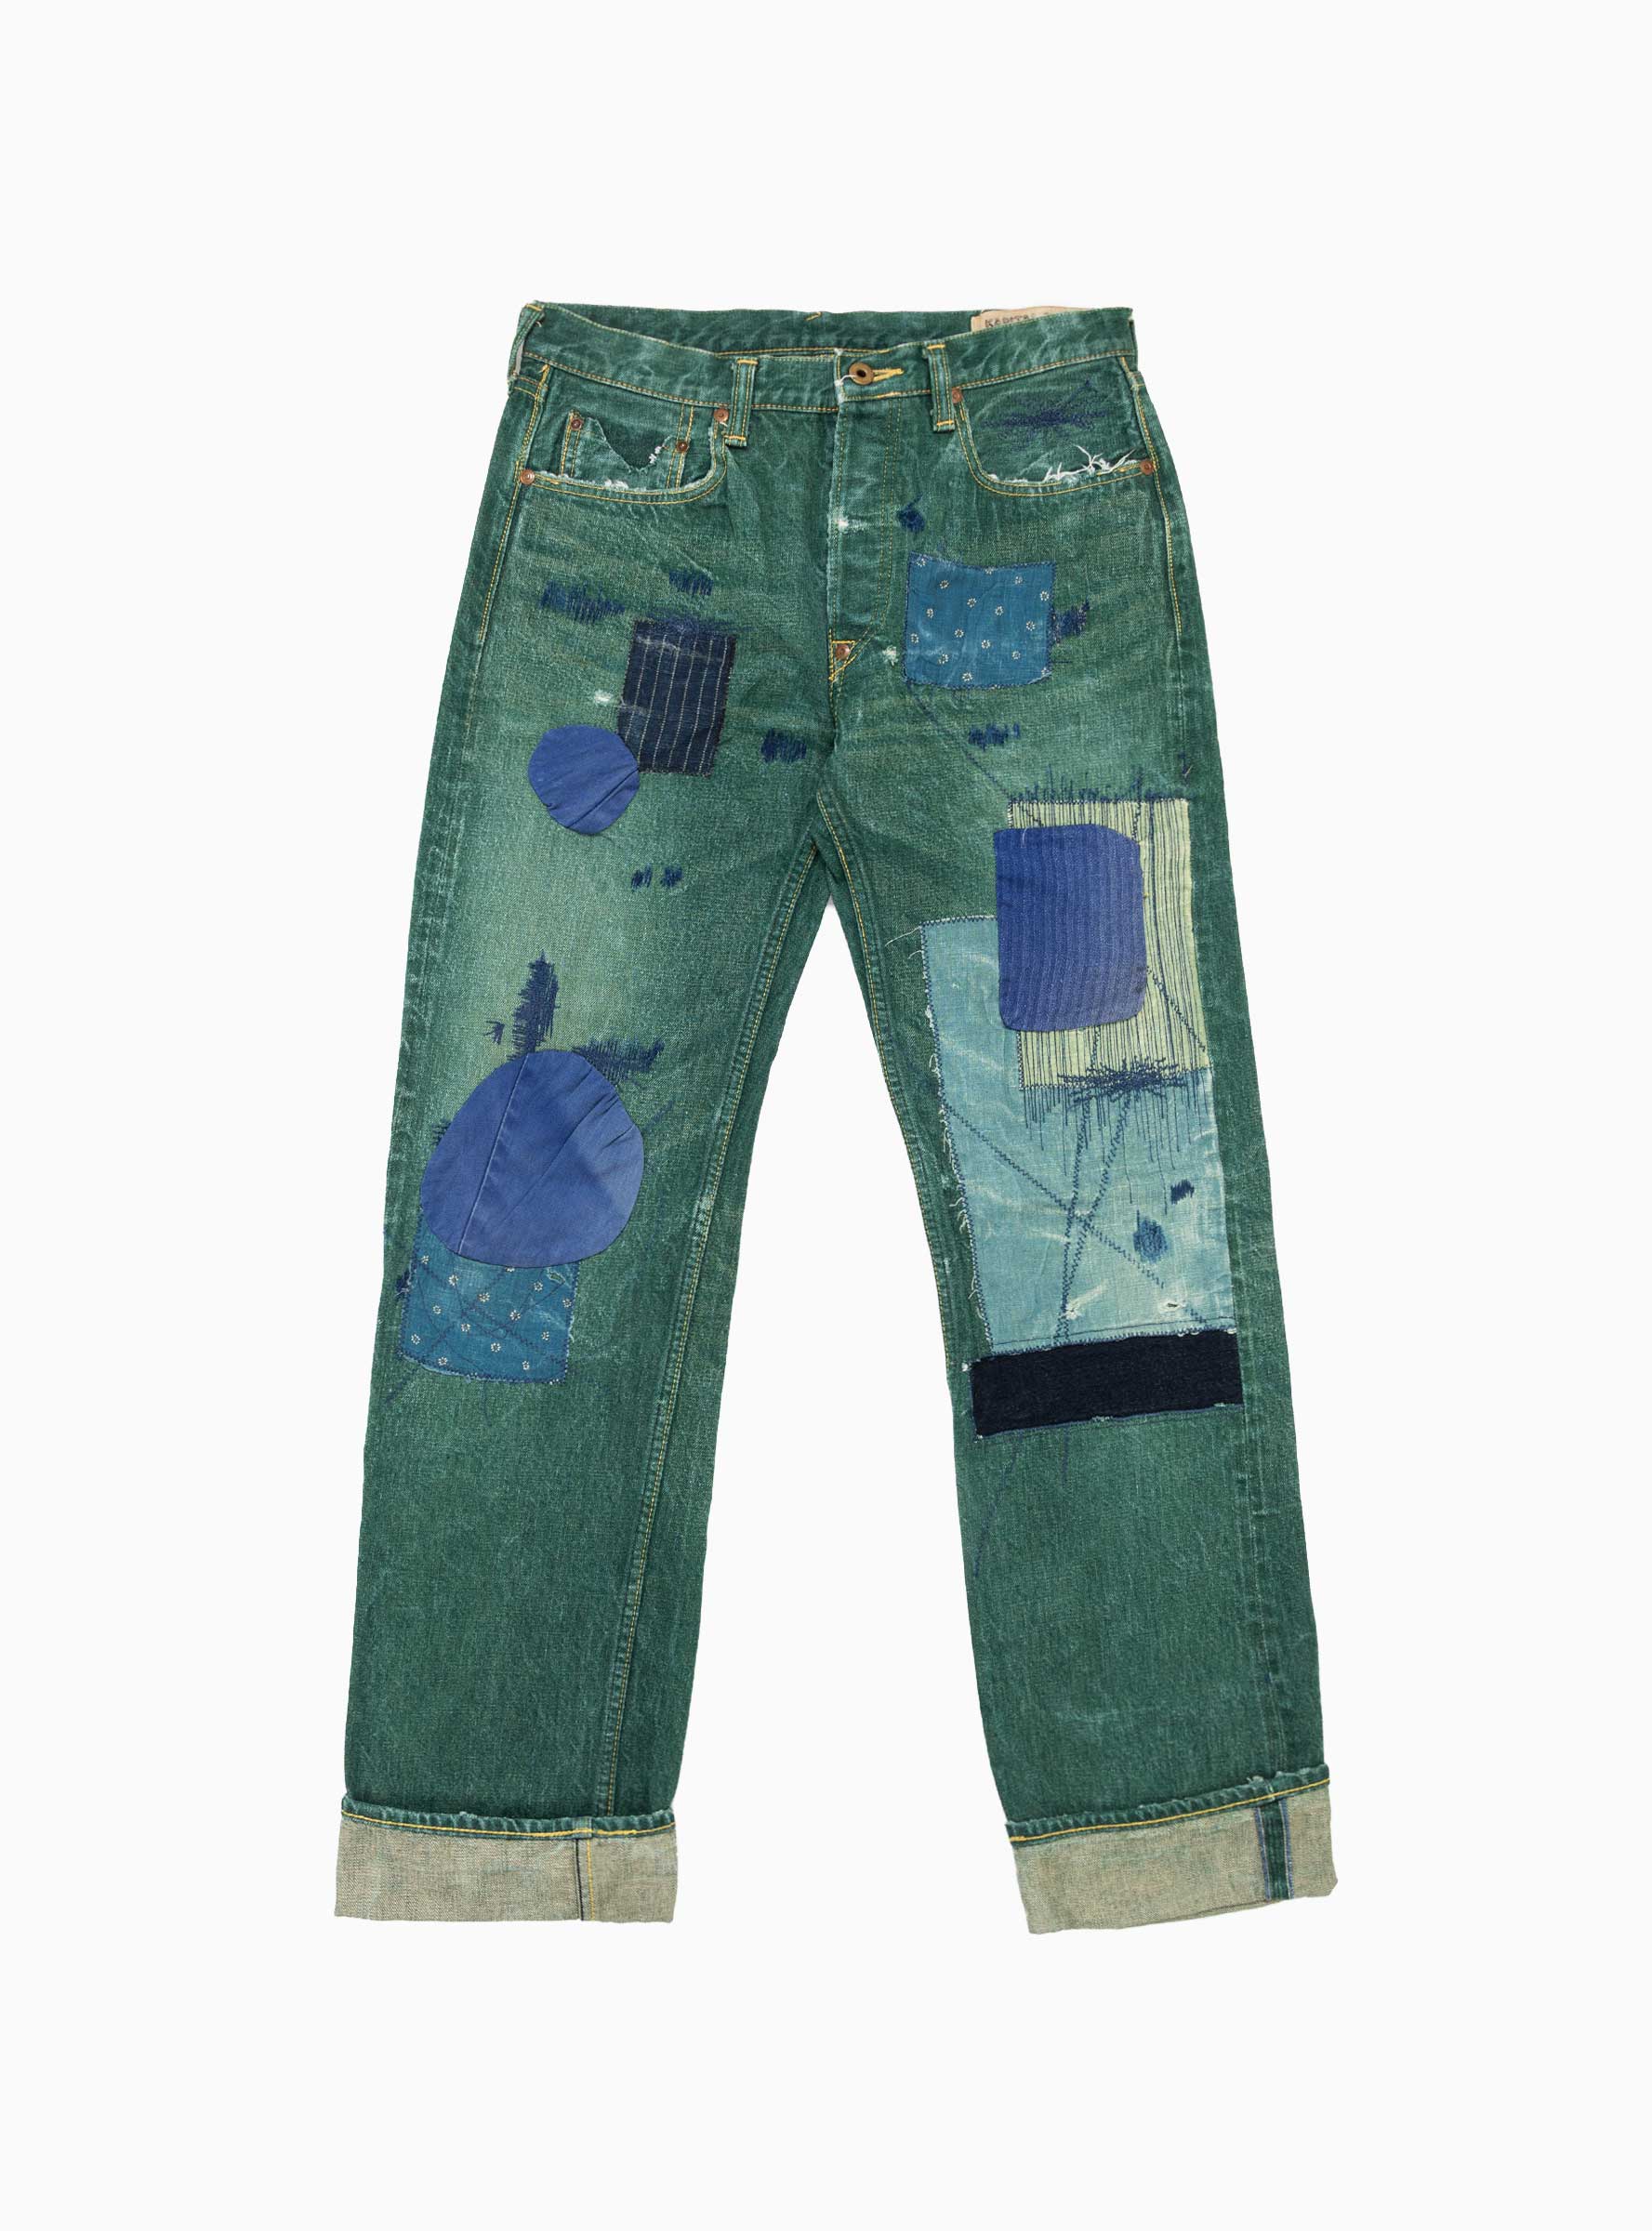 Kapital Kountry No.4 Indigo Patchwork Jeans